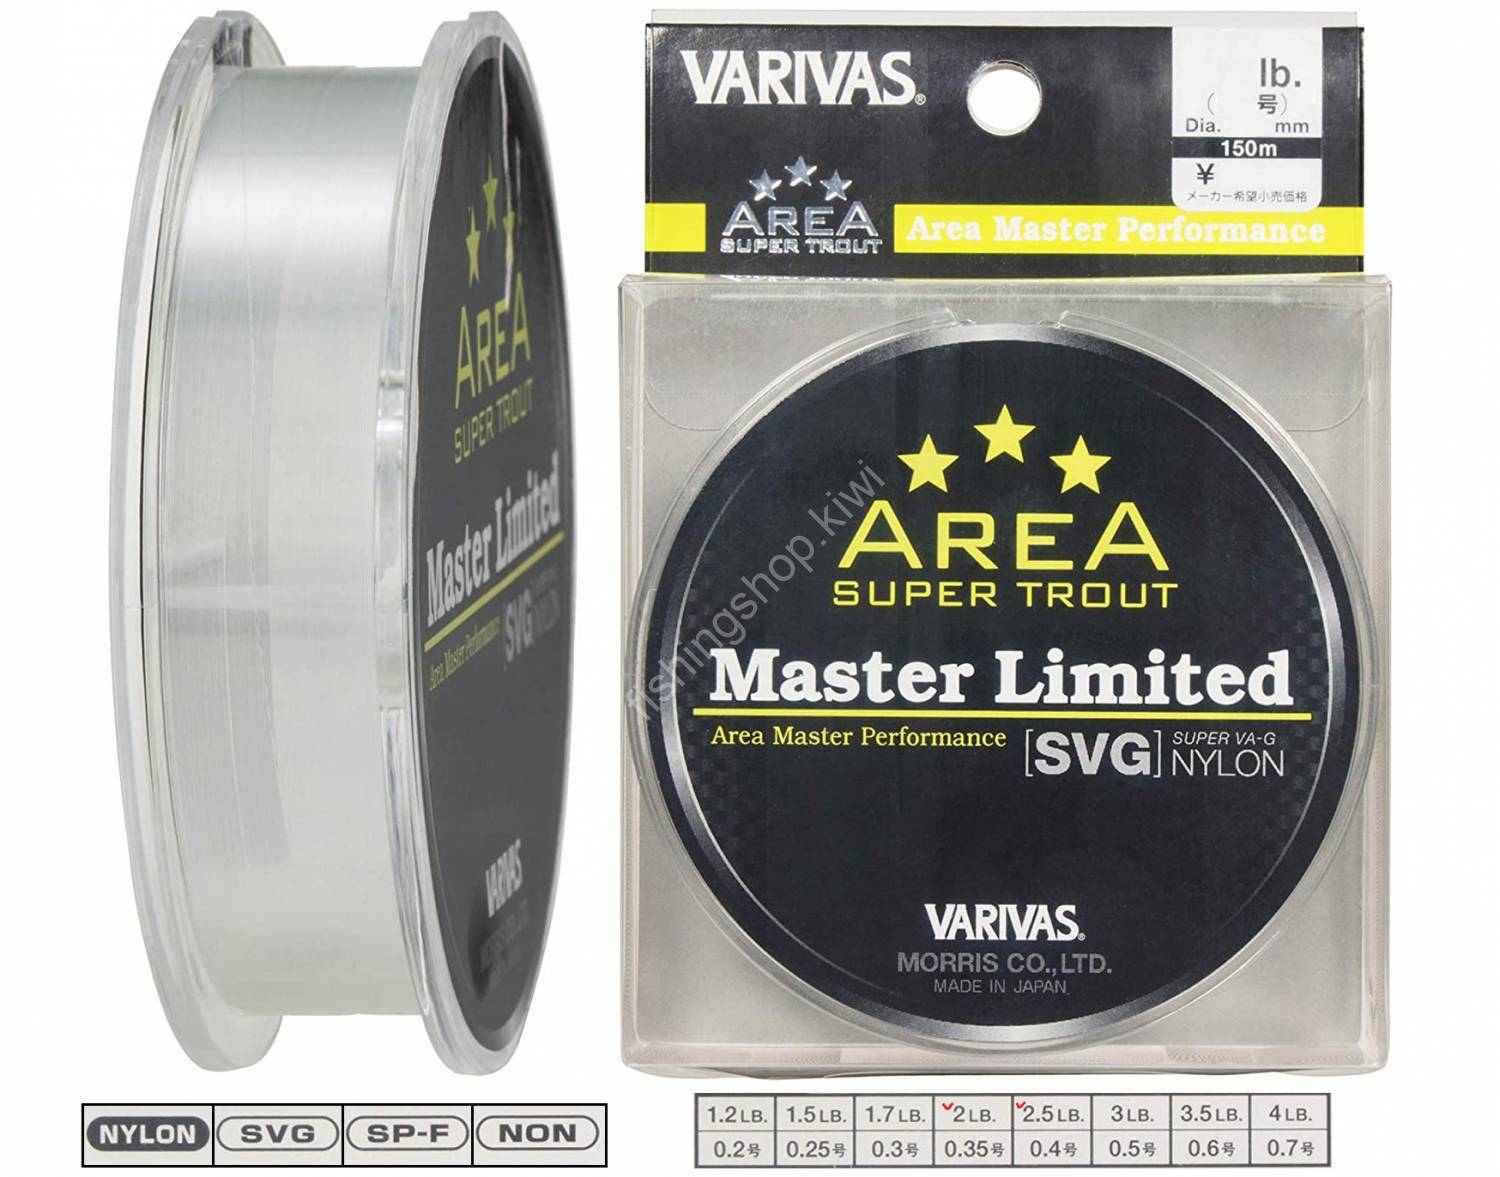 VARIVAS Super Trout Area Master Limited SVG [Natural] 150m #0.2 (1.2lb)  Fishing lines buy at